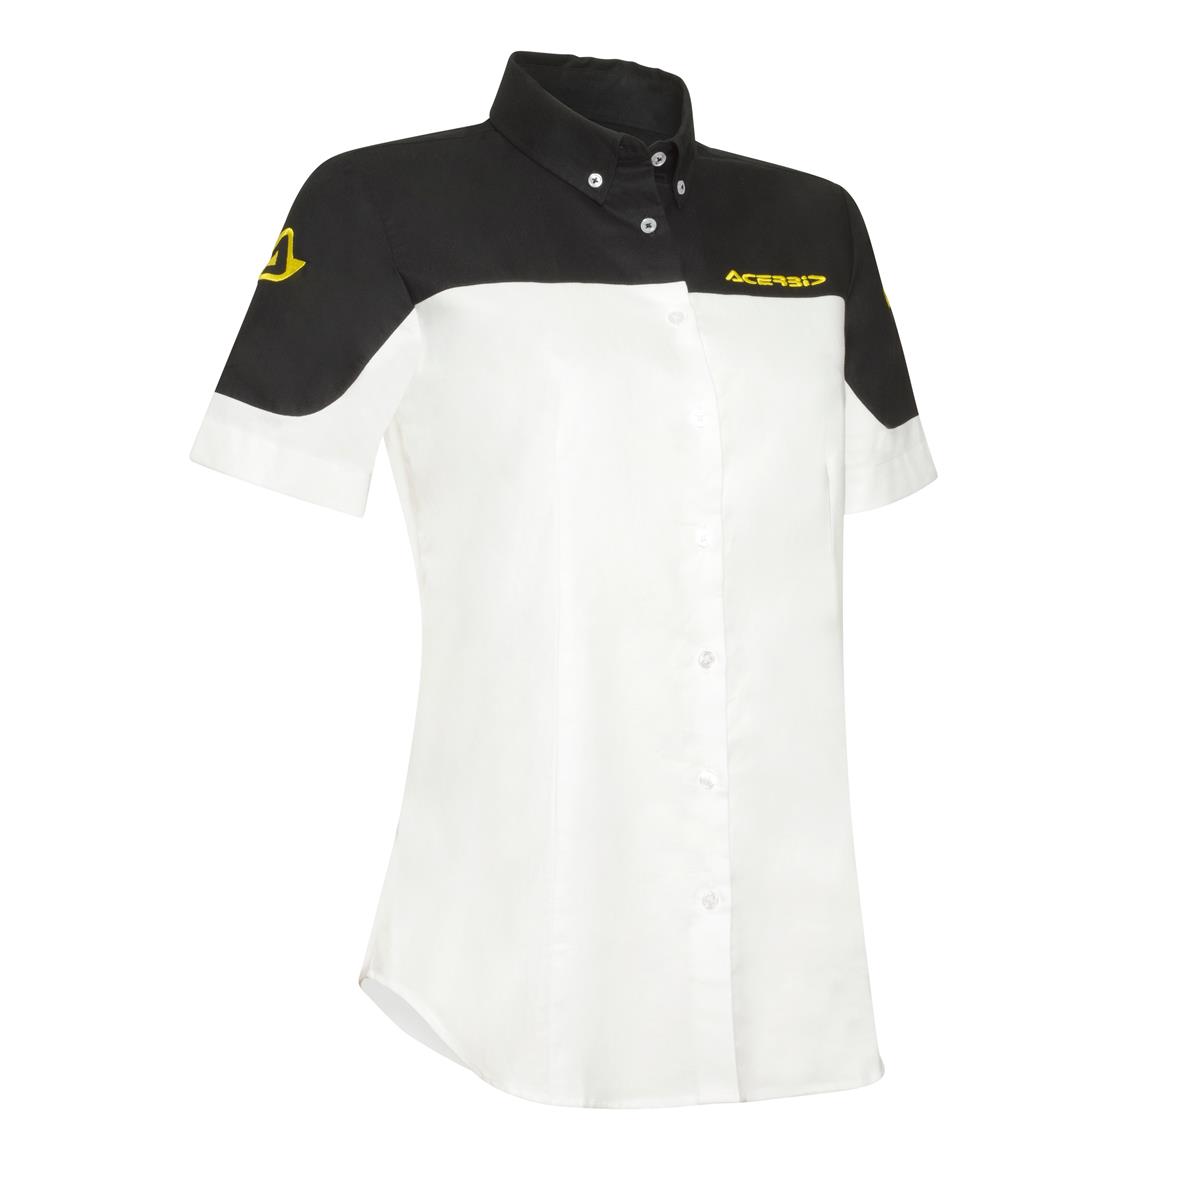 Acerbis Girls Short-Sleeve Shirt Team White/Black